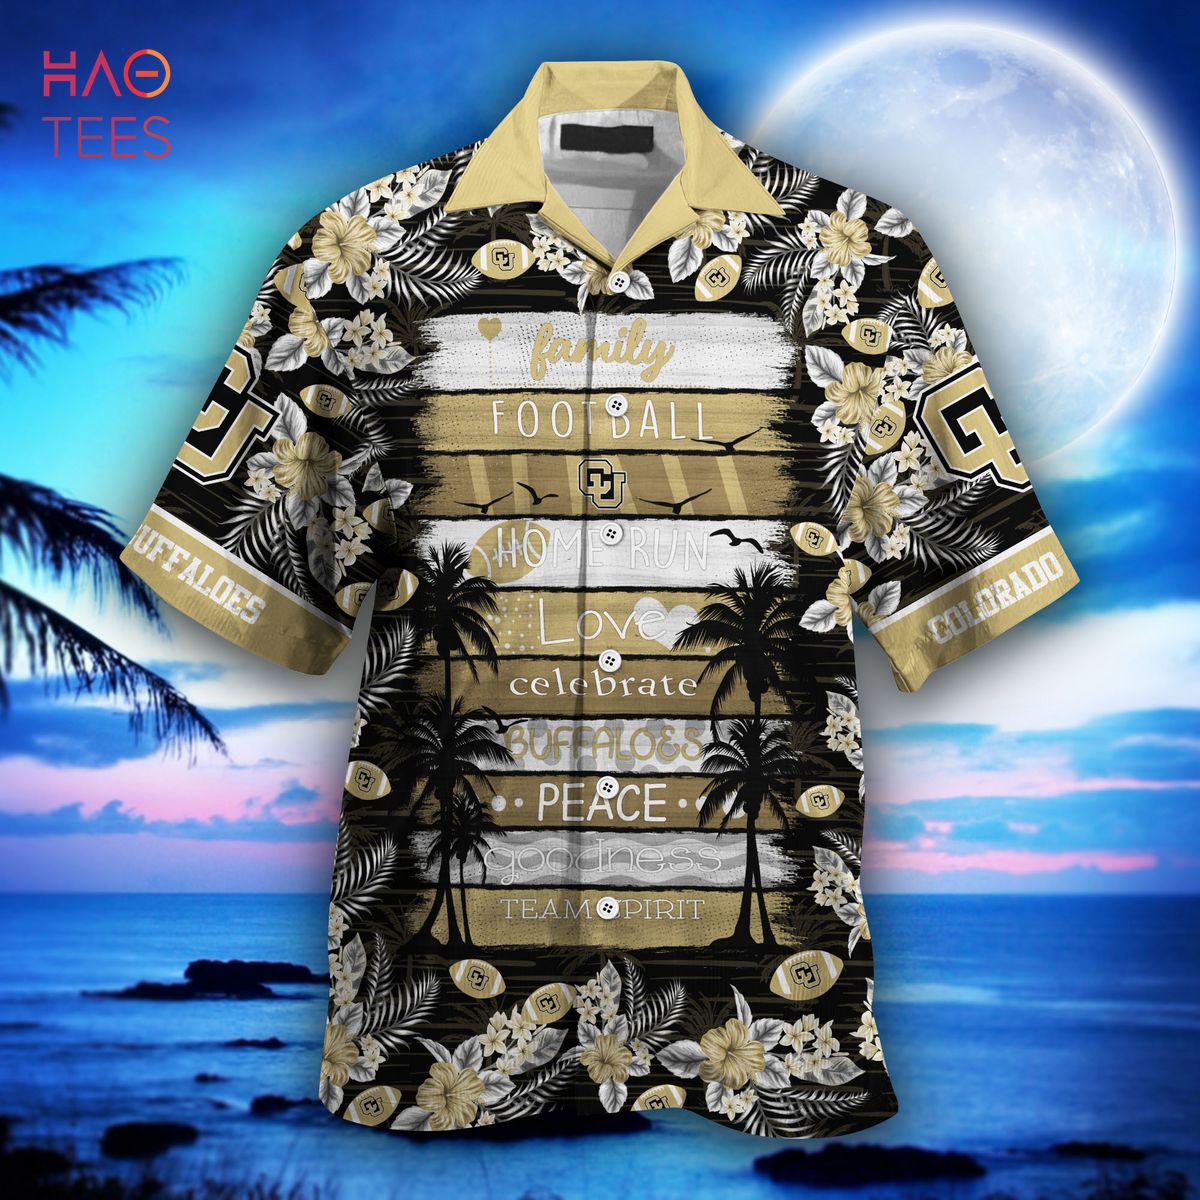 [LIMITED] Colorado Buffaloes Hawaiian Shirt, New Gift For Summer